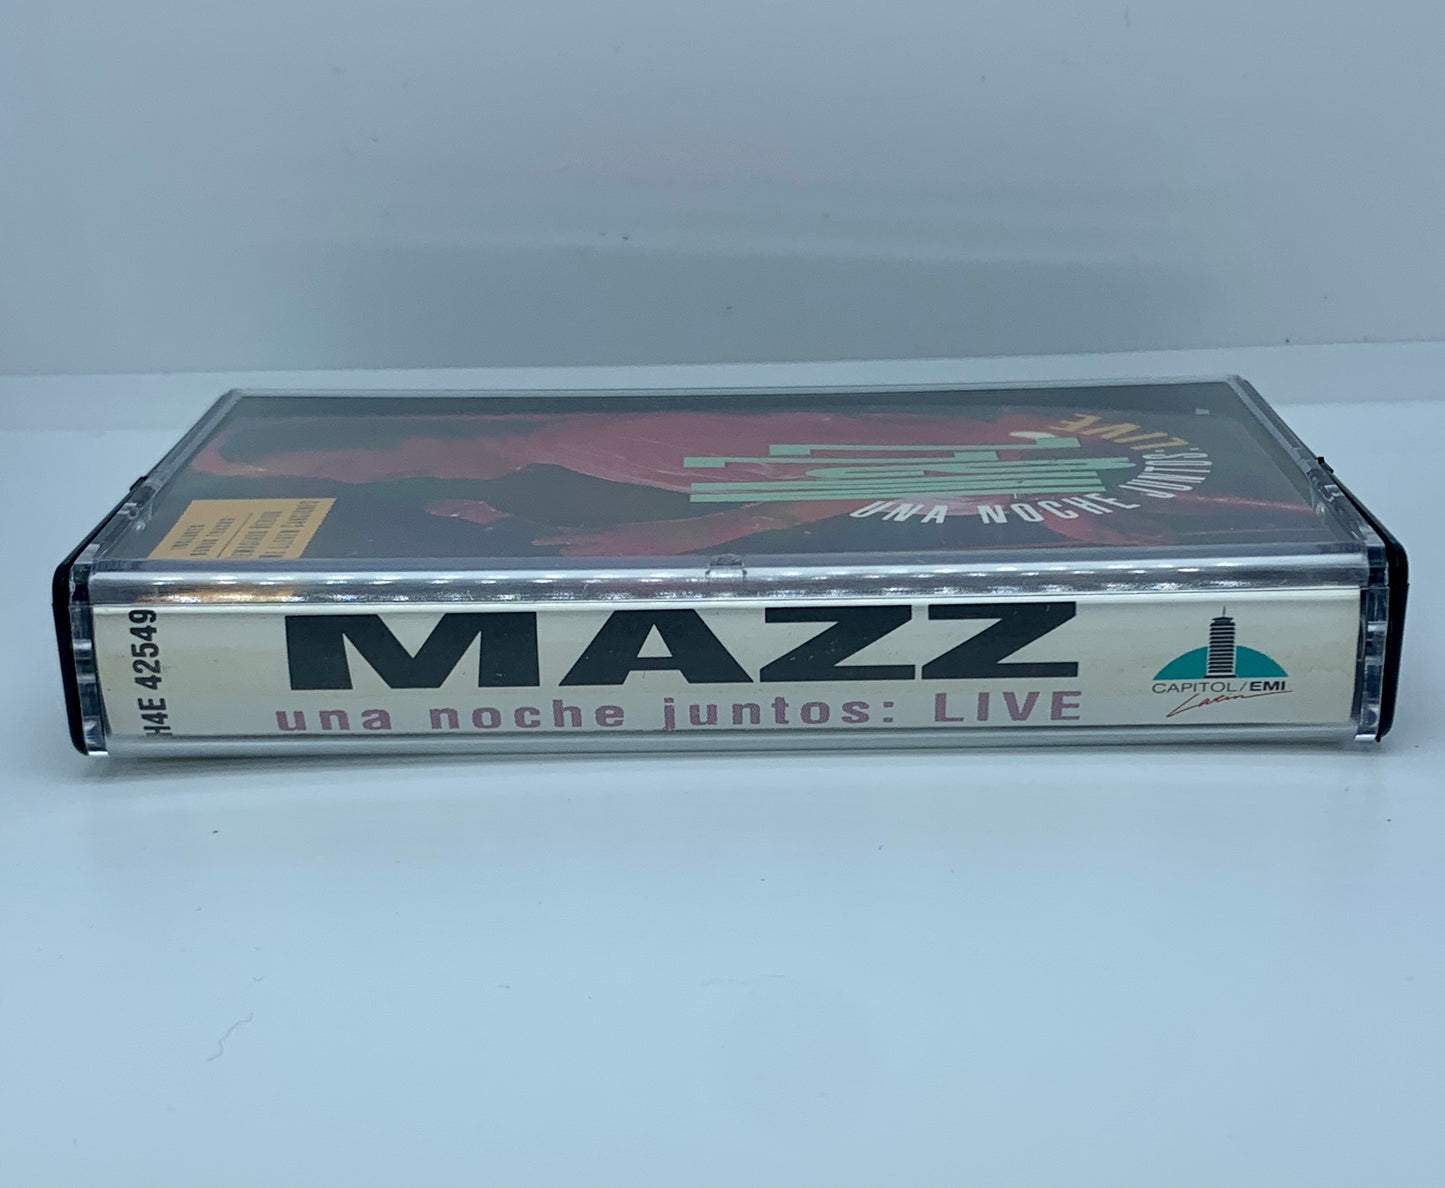 Mazz - Una Noche Juntos: Live (Cassette)